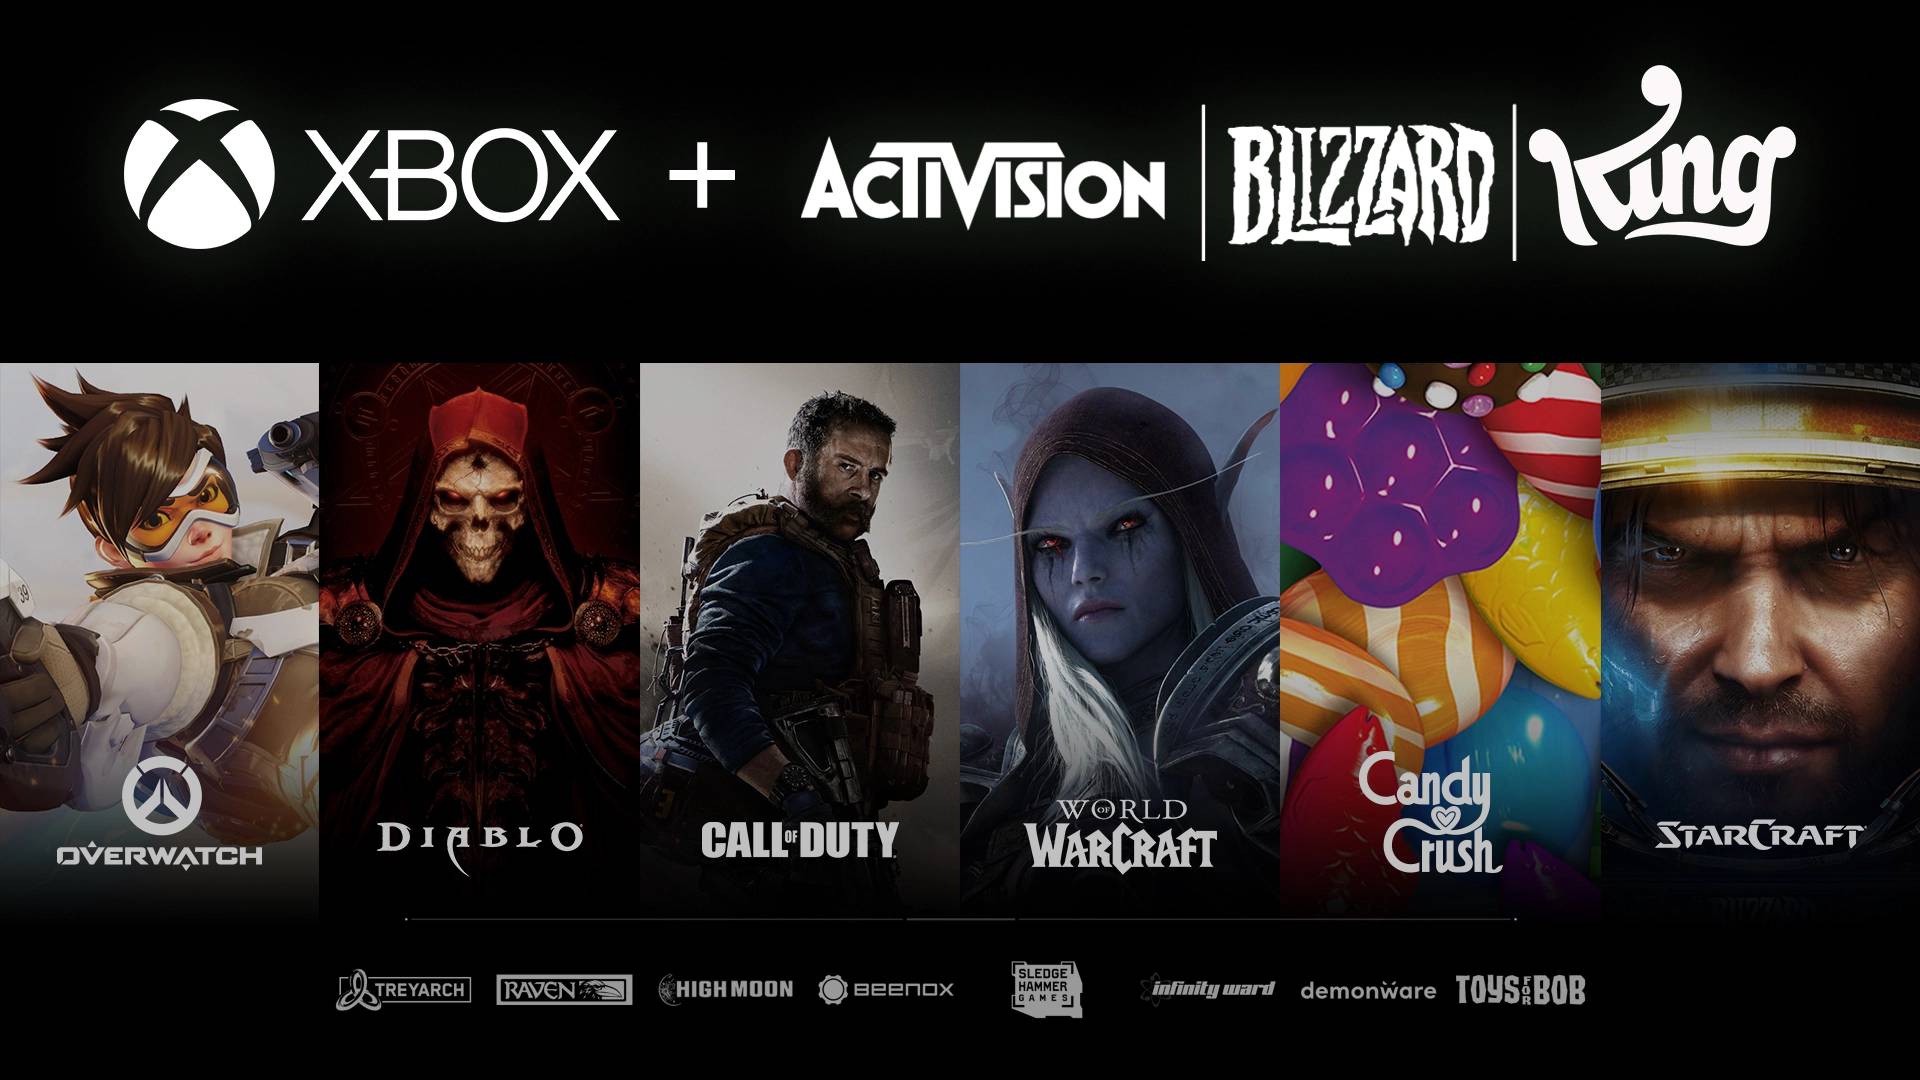 MicrosoftがActivision Blizzardを買収